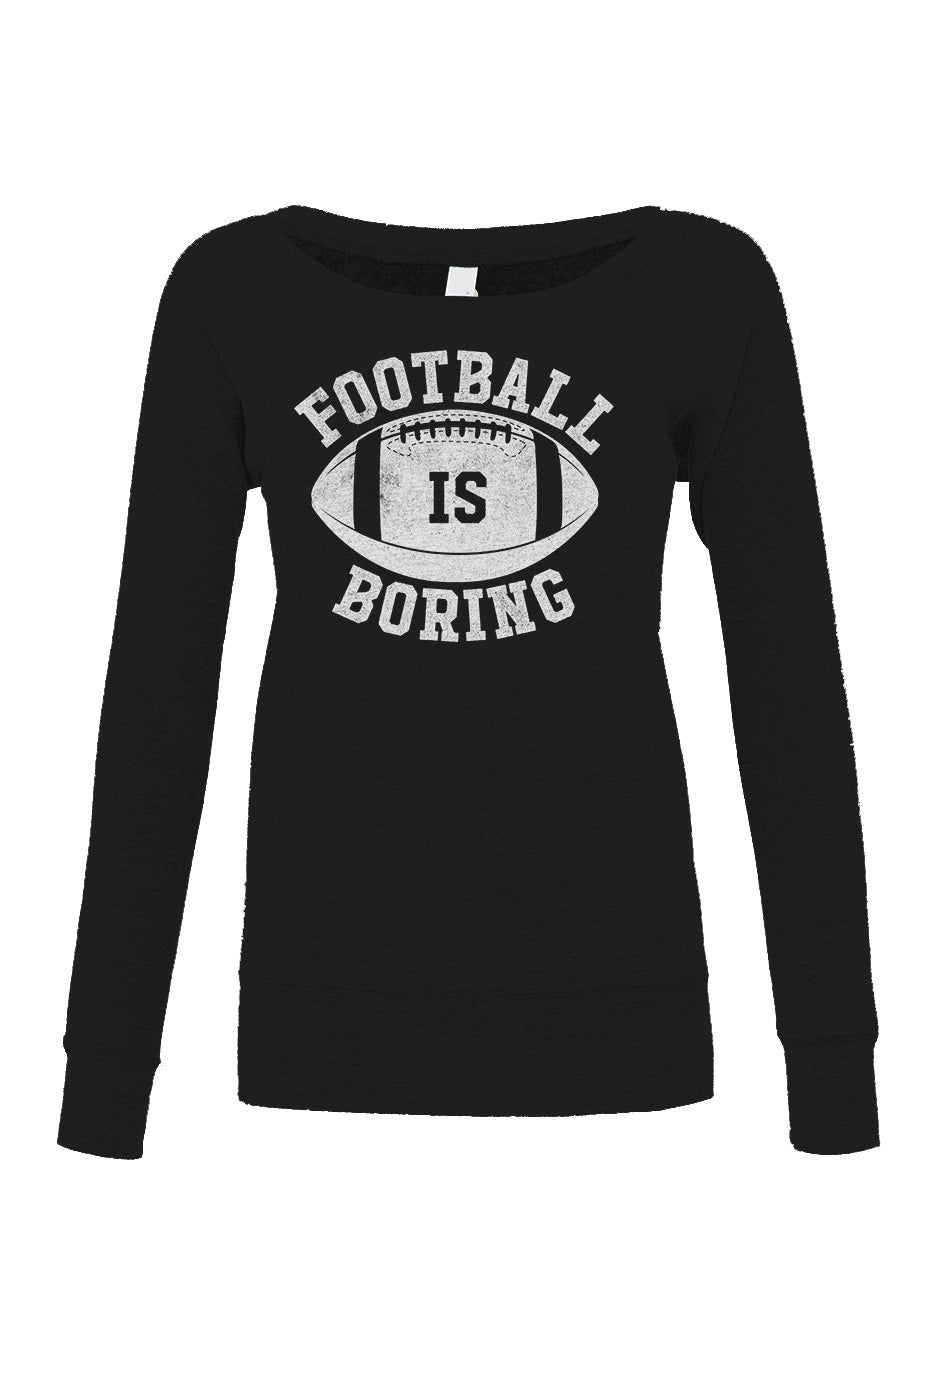 Women's Football is Boring Scoop Neck Fleece - Anti Football Shirt